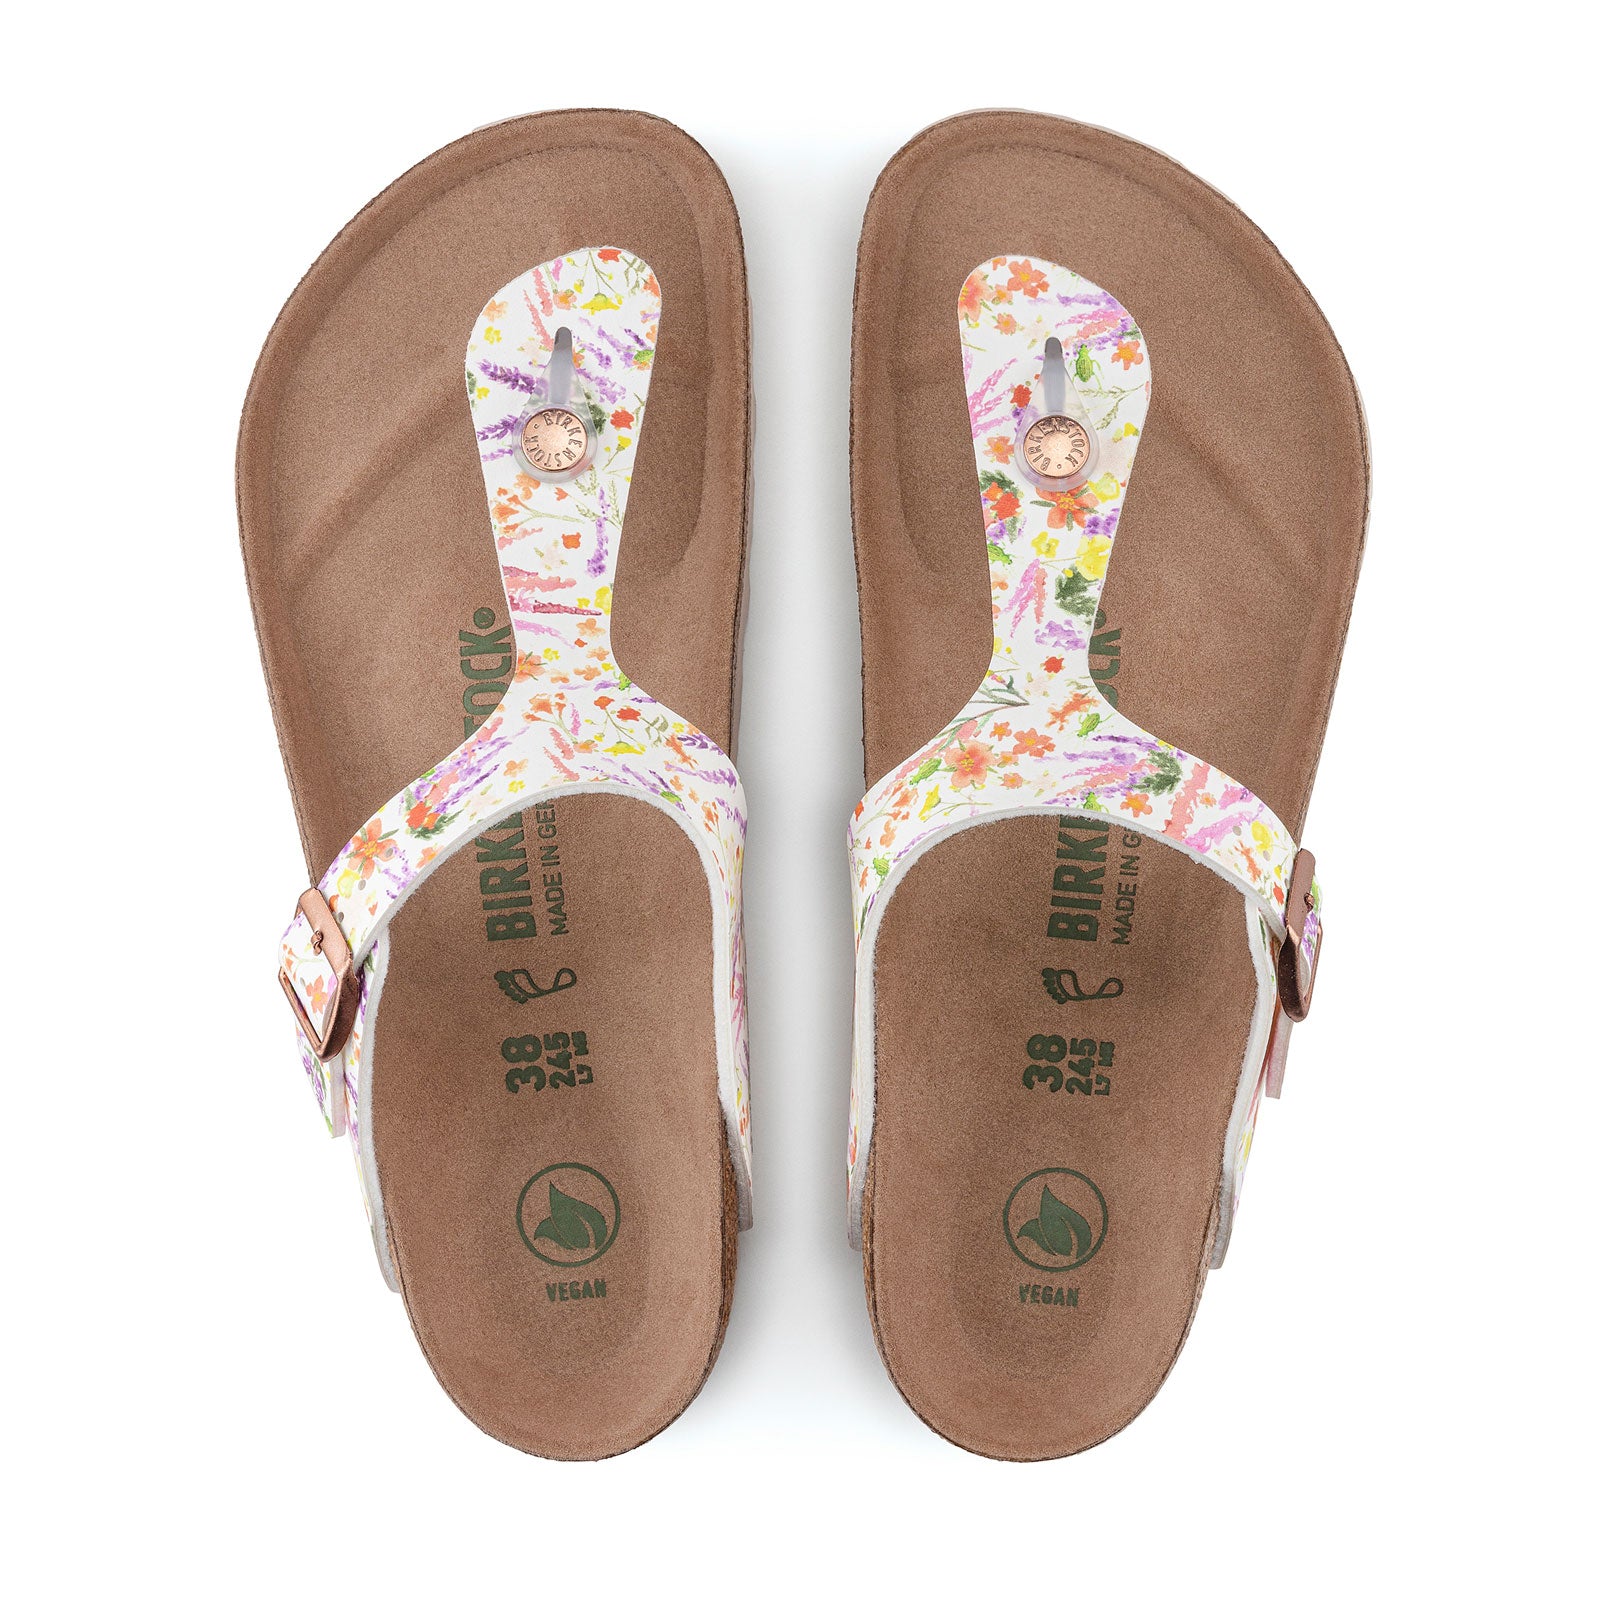 Birkenstock Gizeh Vegan Birko-Flor Thong Sandal (Women) - Summer Garden Rose Sandals - Thong - The Heel Shoe Fitters